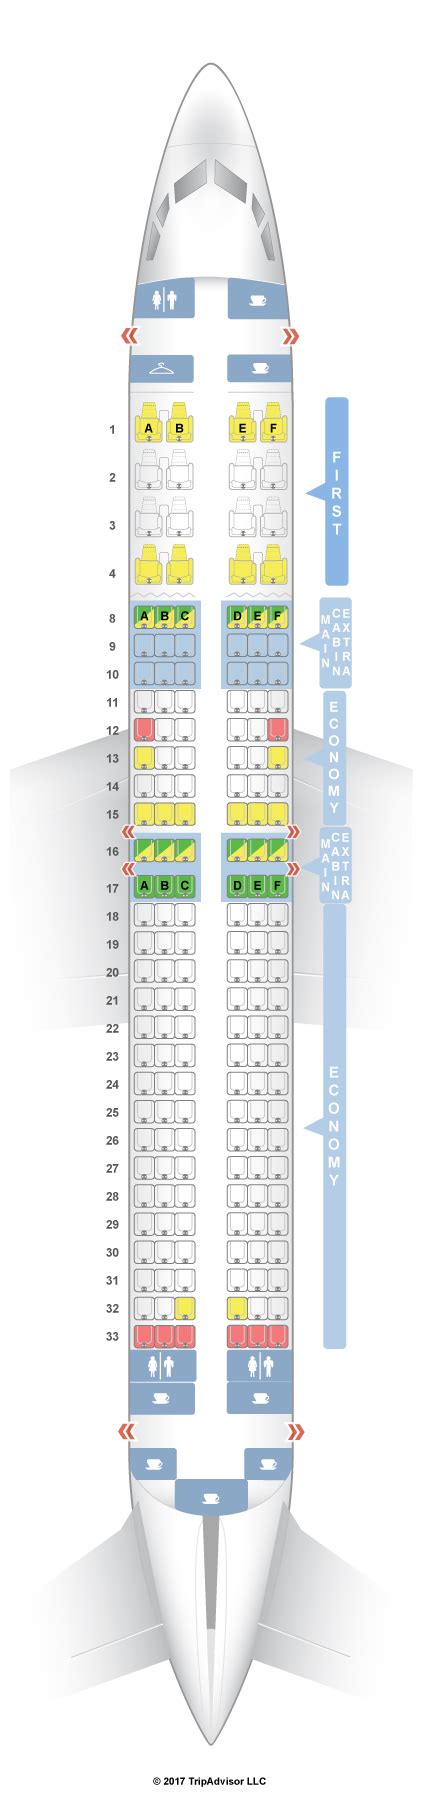 aa 737 max 8 seat map